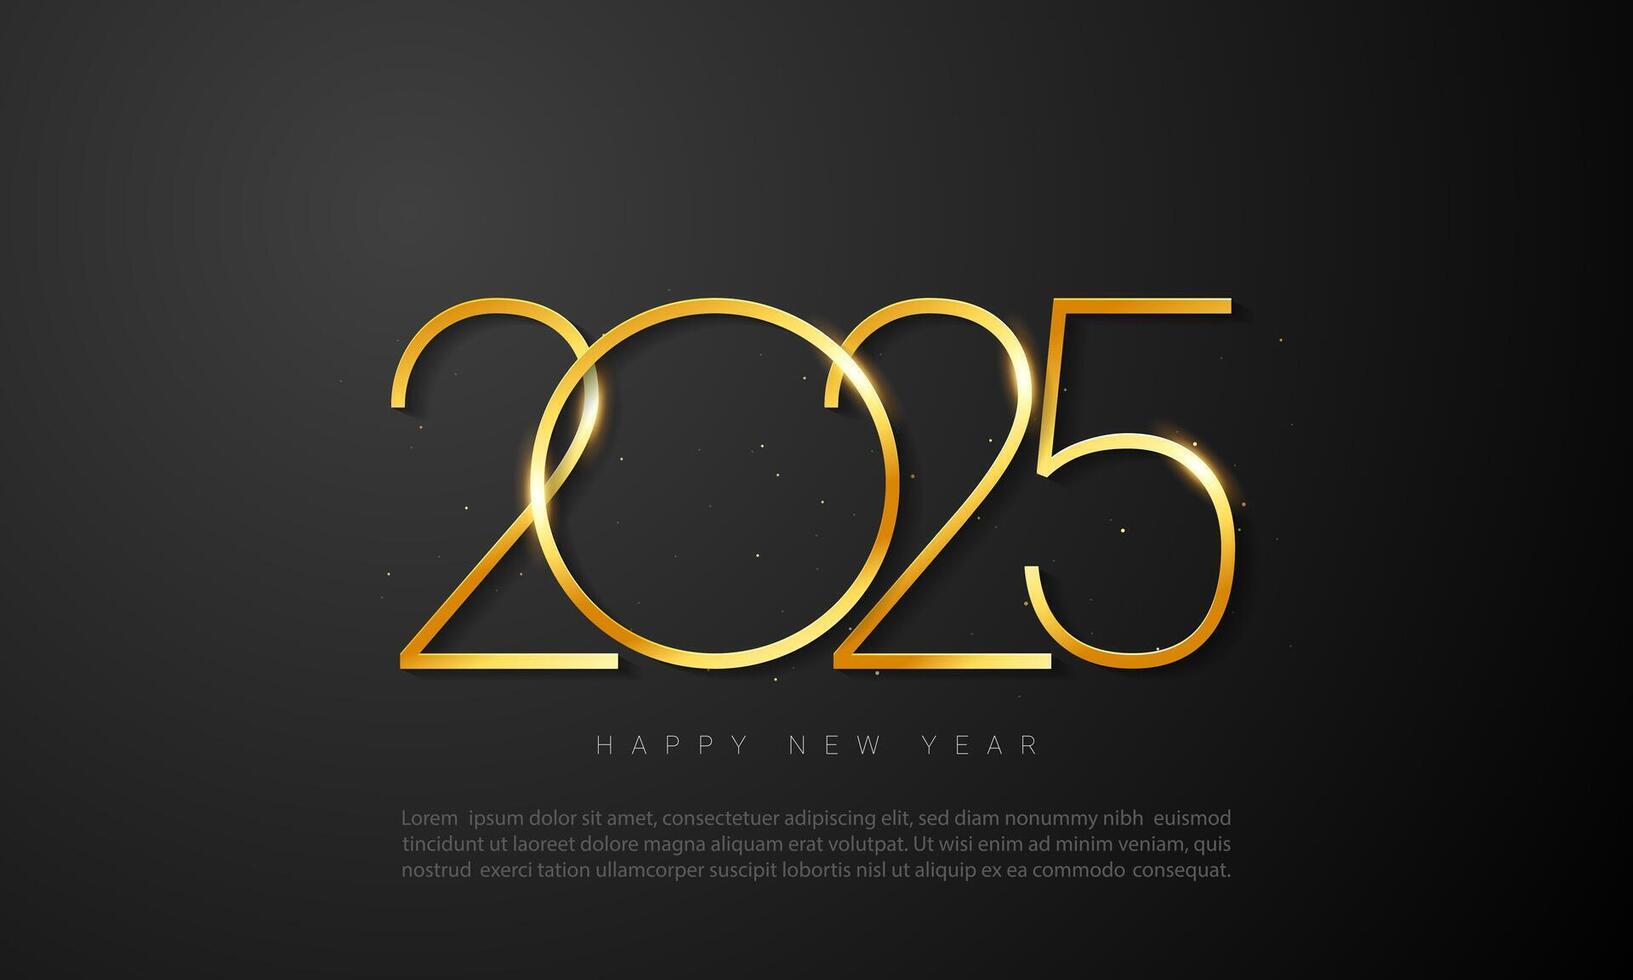 Happy new year 2025 background design. vector